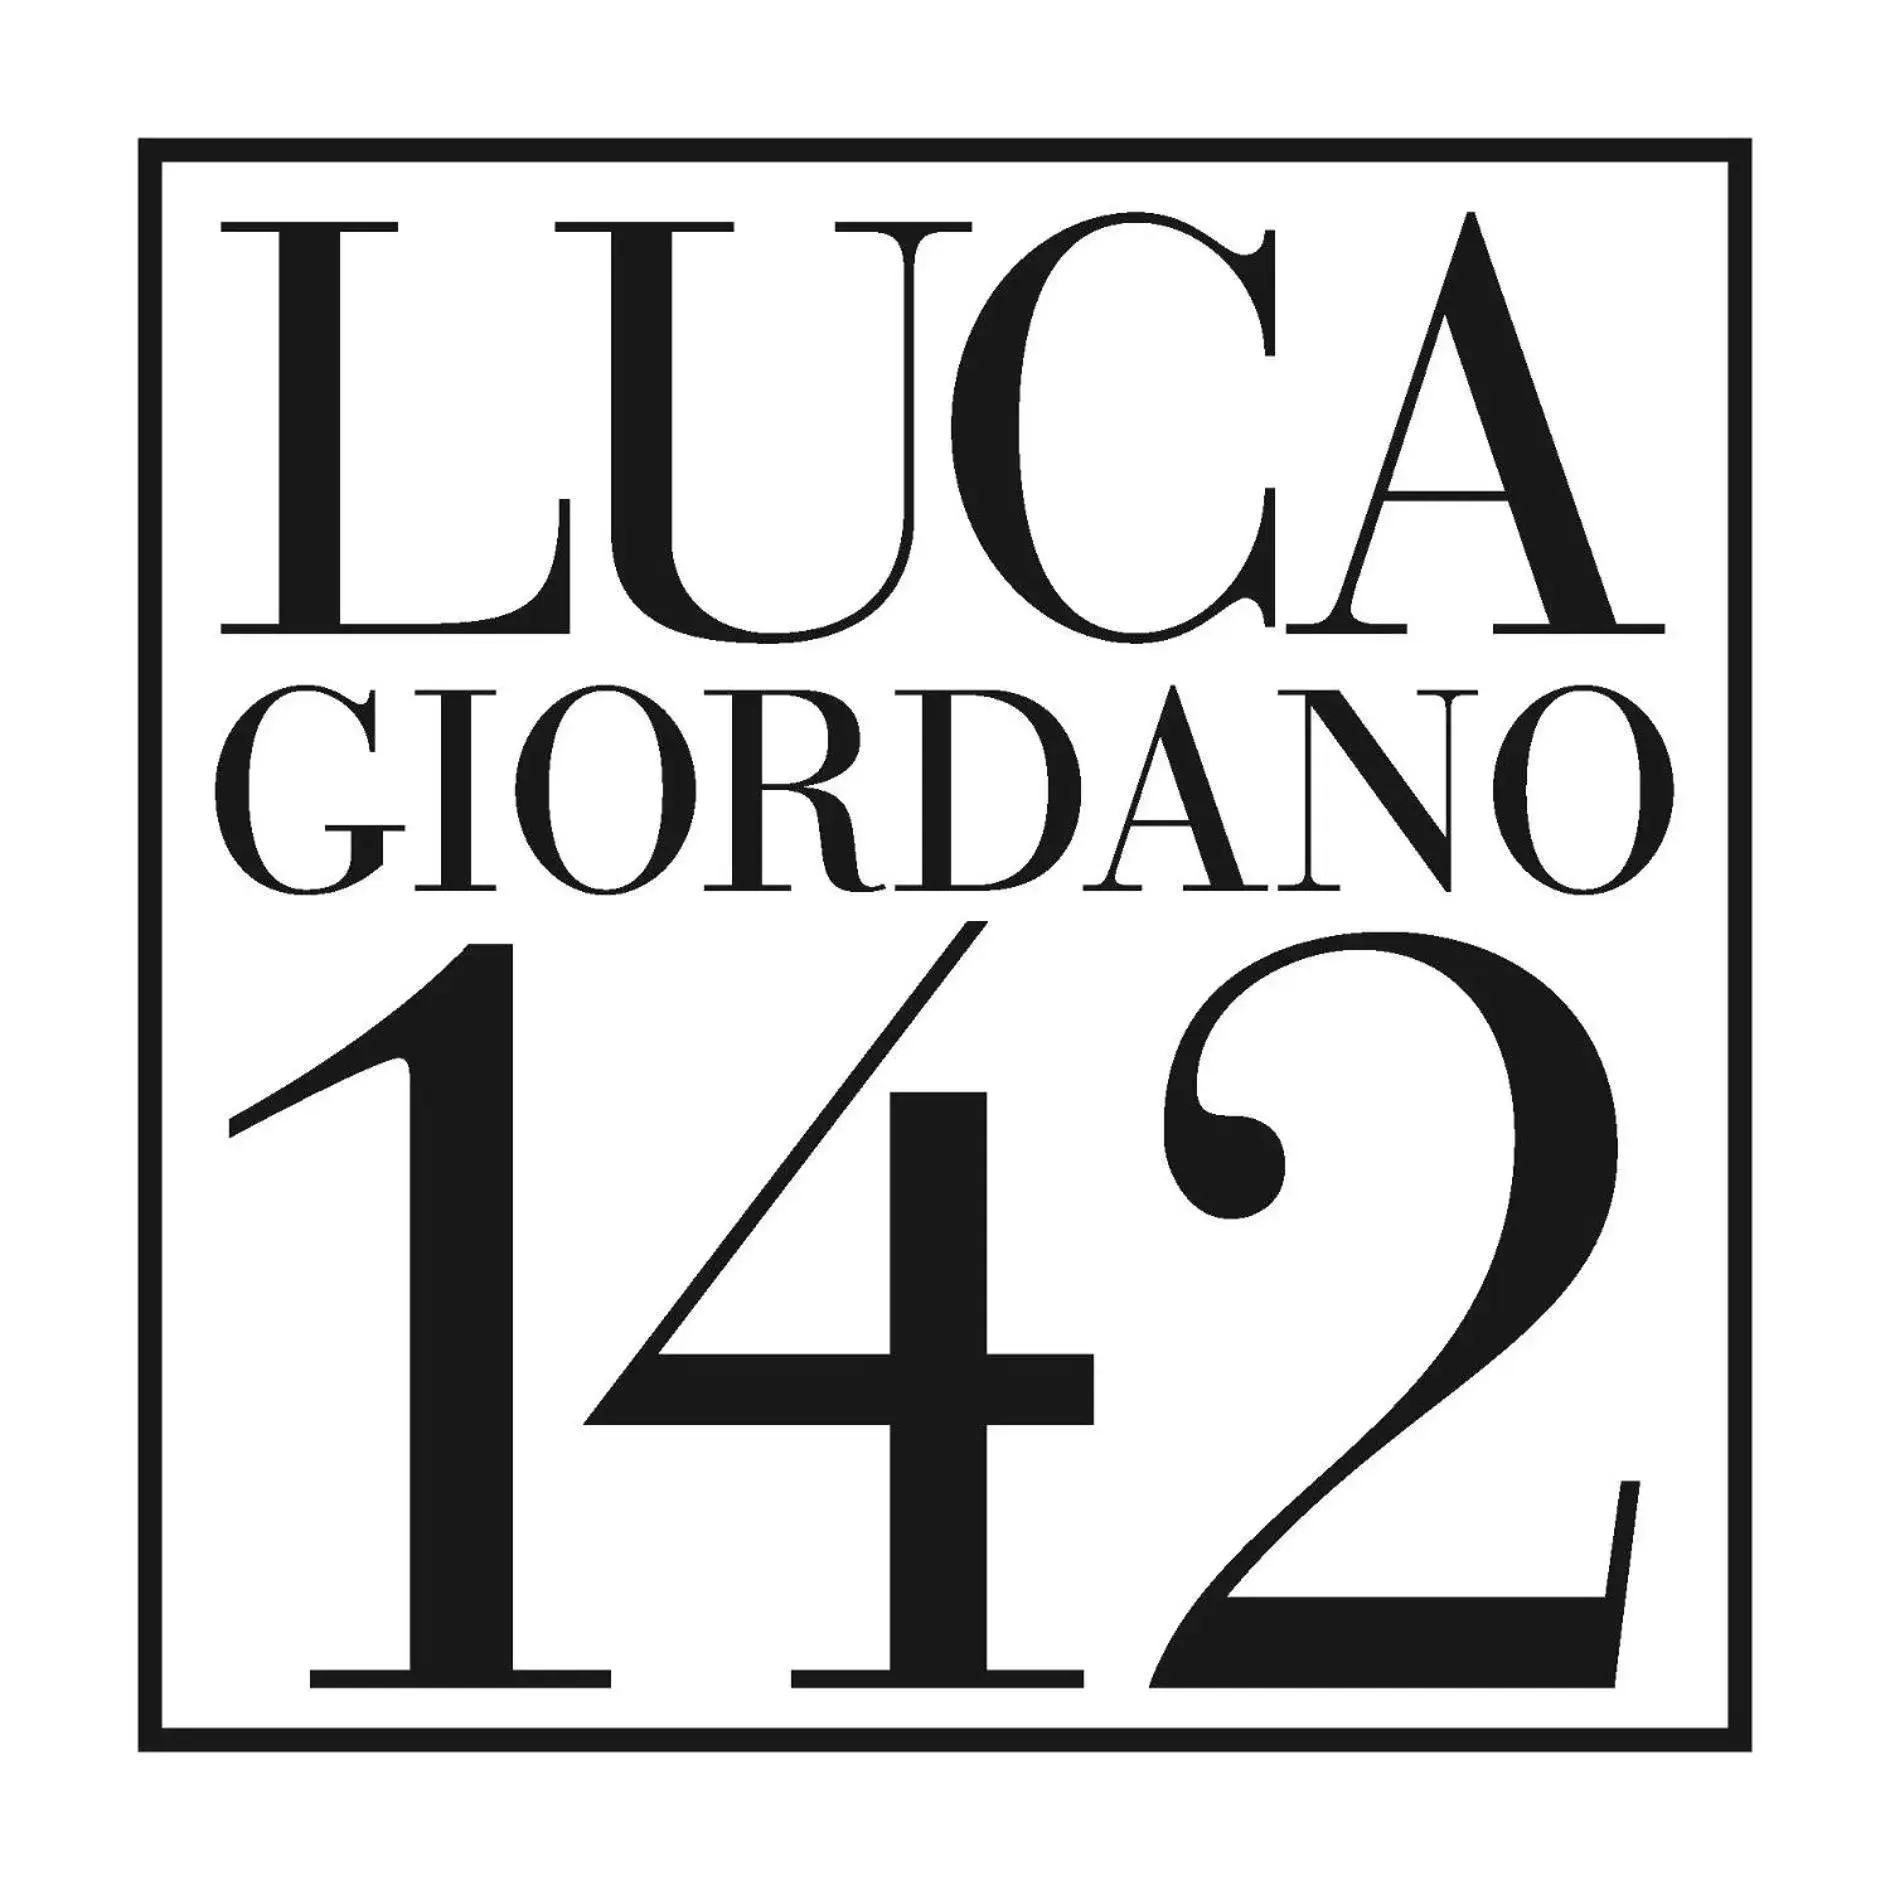 Property logo or sign in Luca Giordano 142 B&B